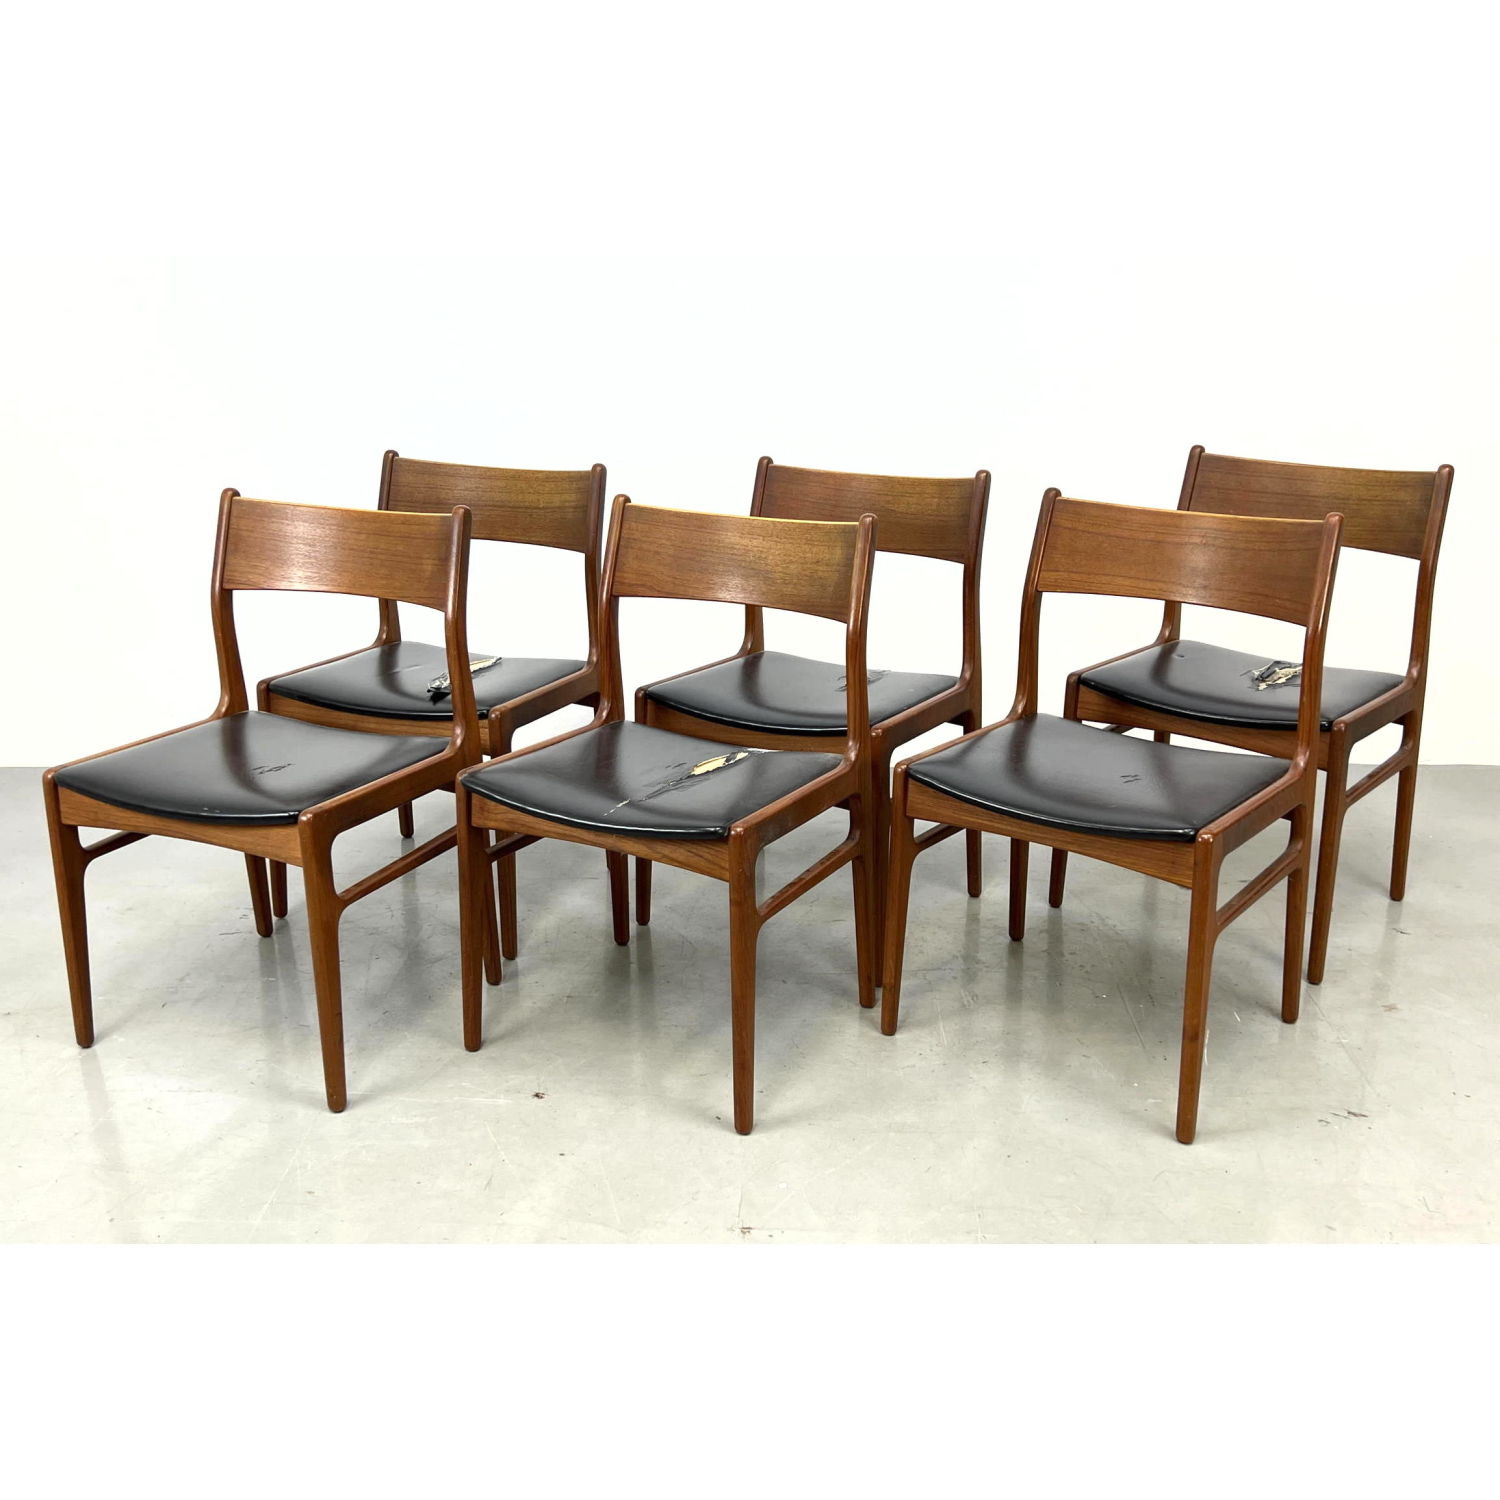 Set 6 Danish teak dining chairs.